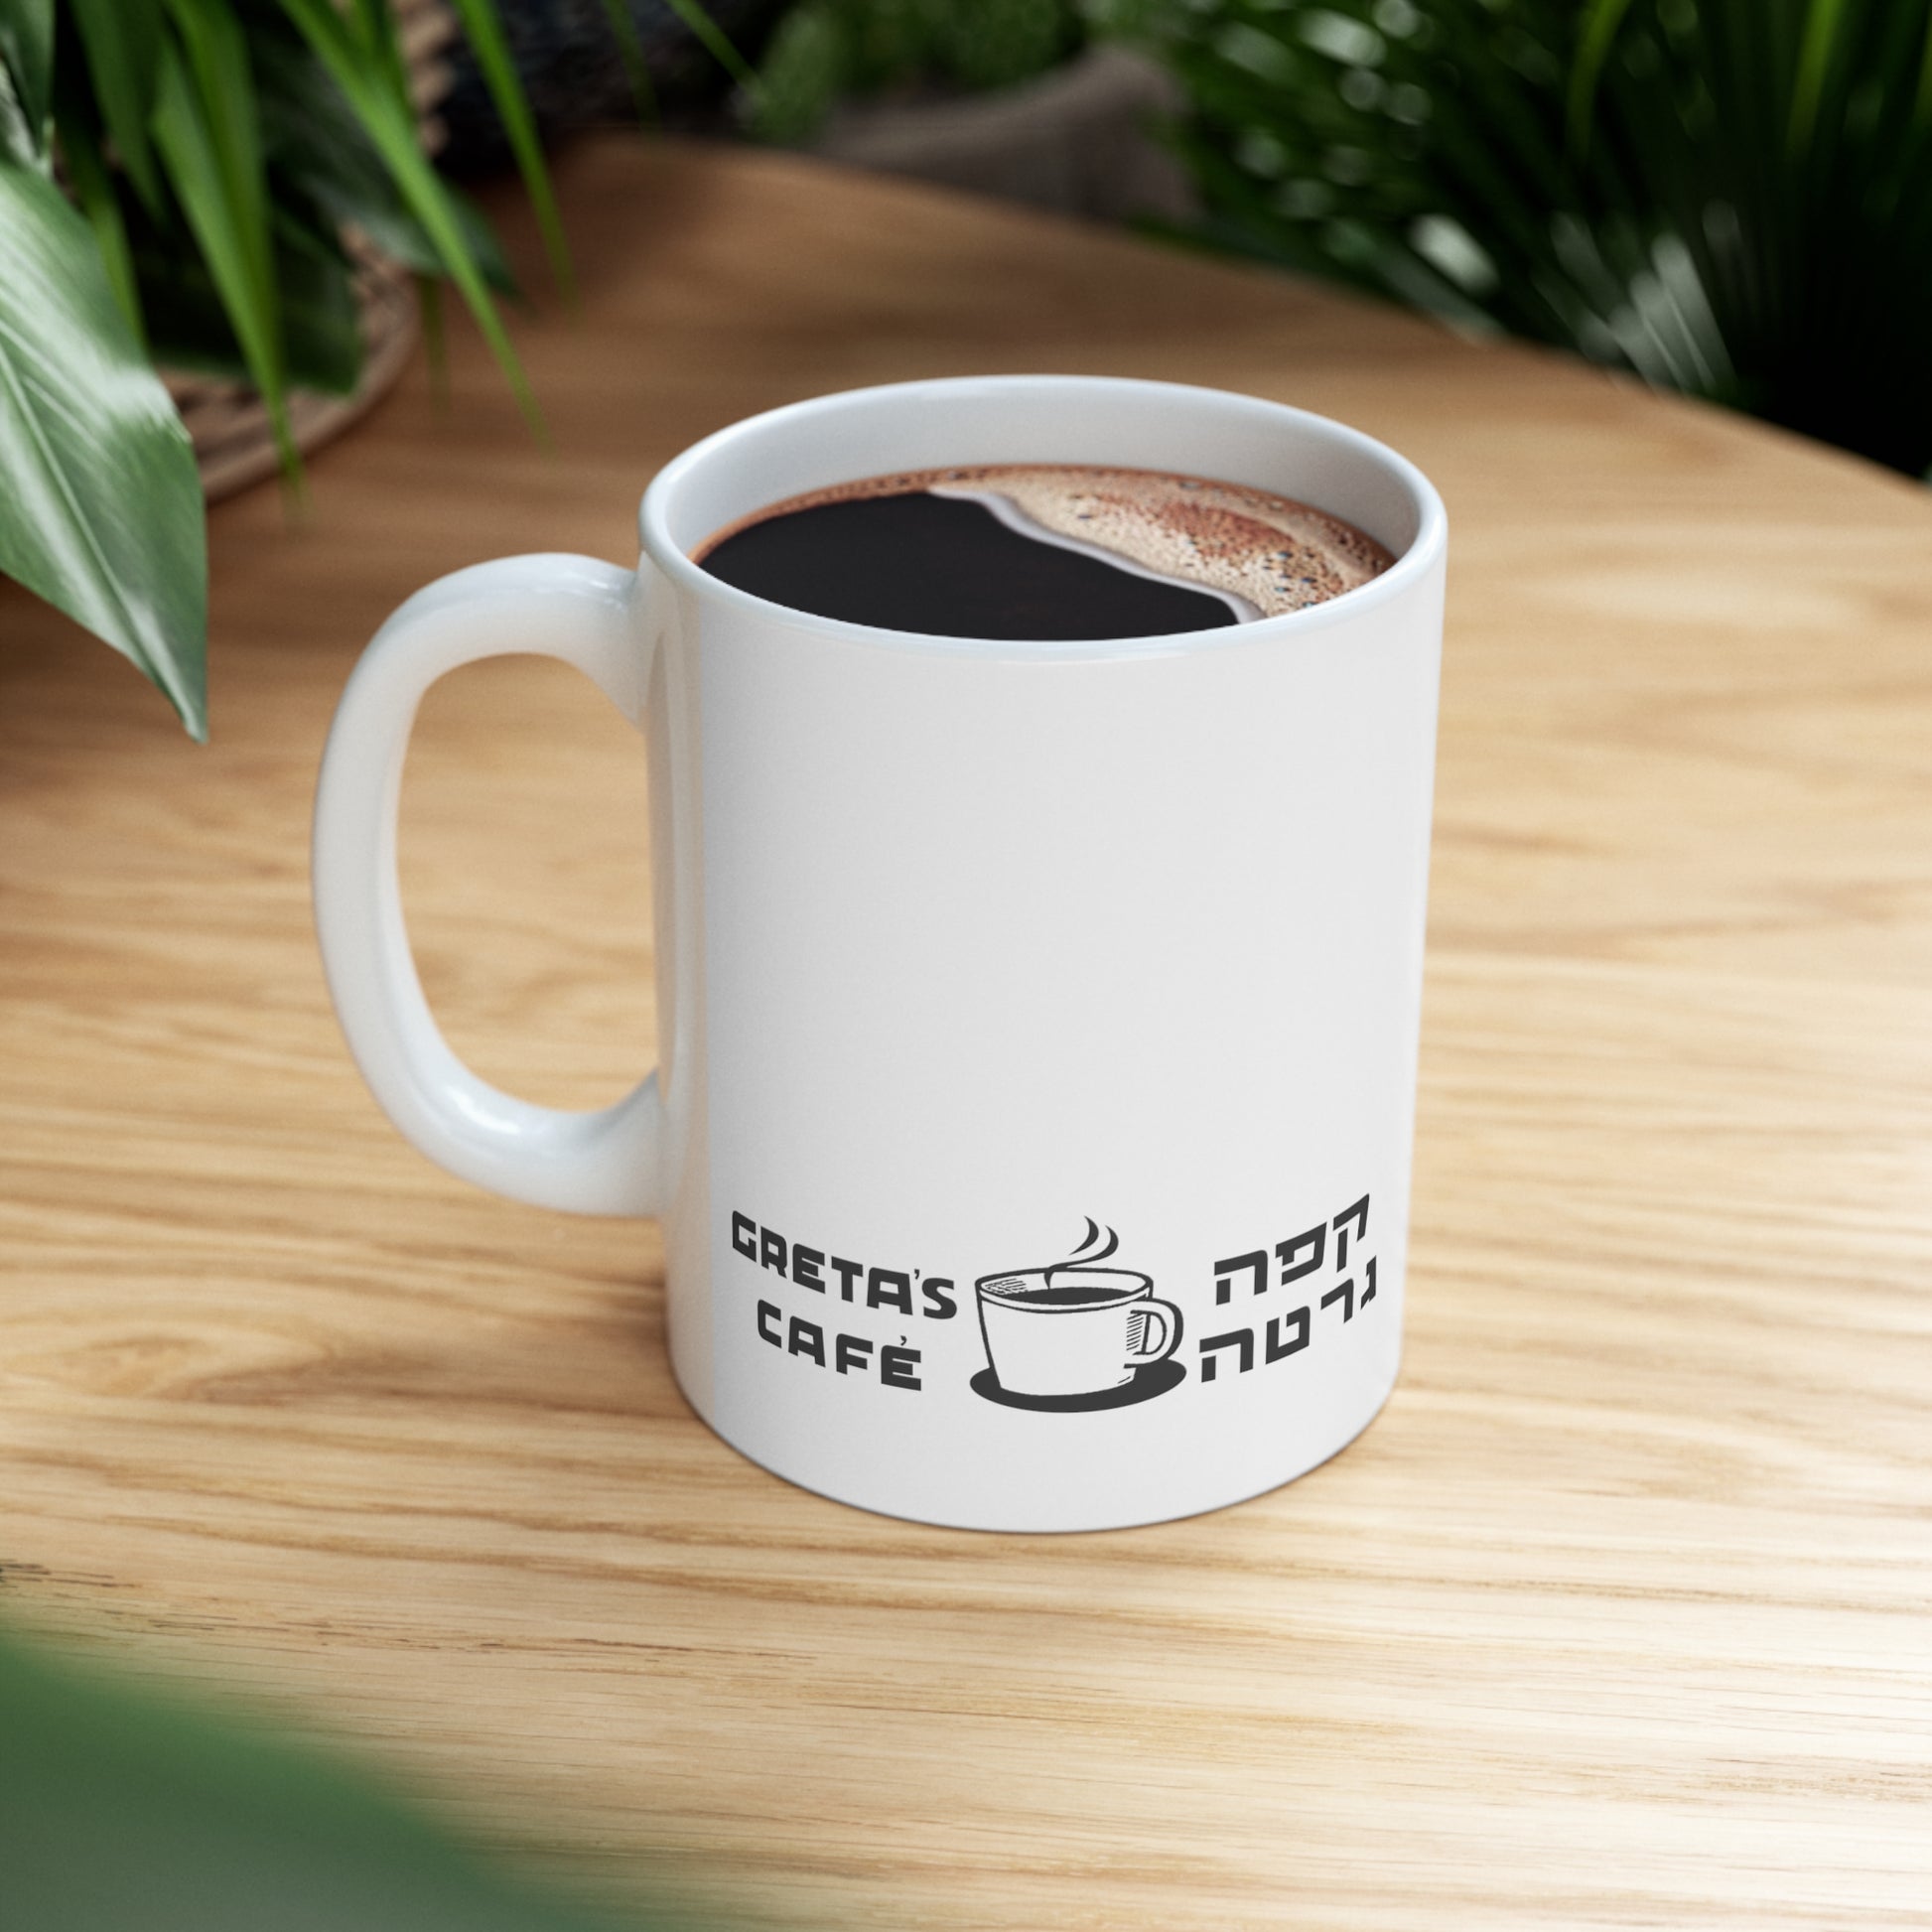 Greta's Cafe mug - text bottom